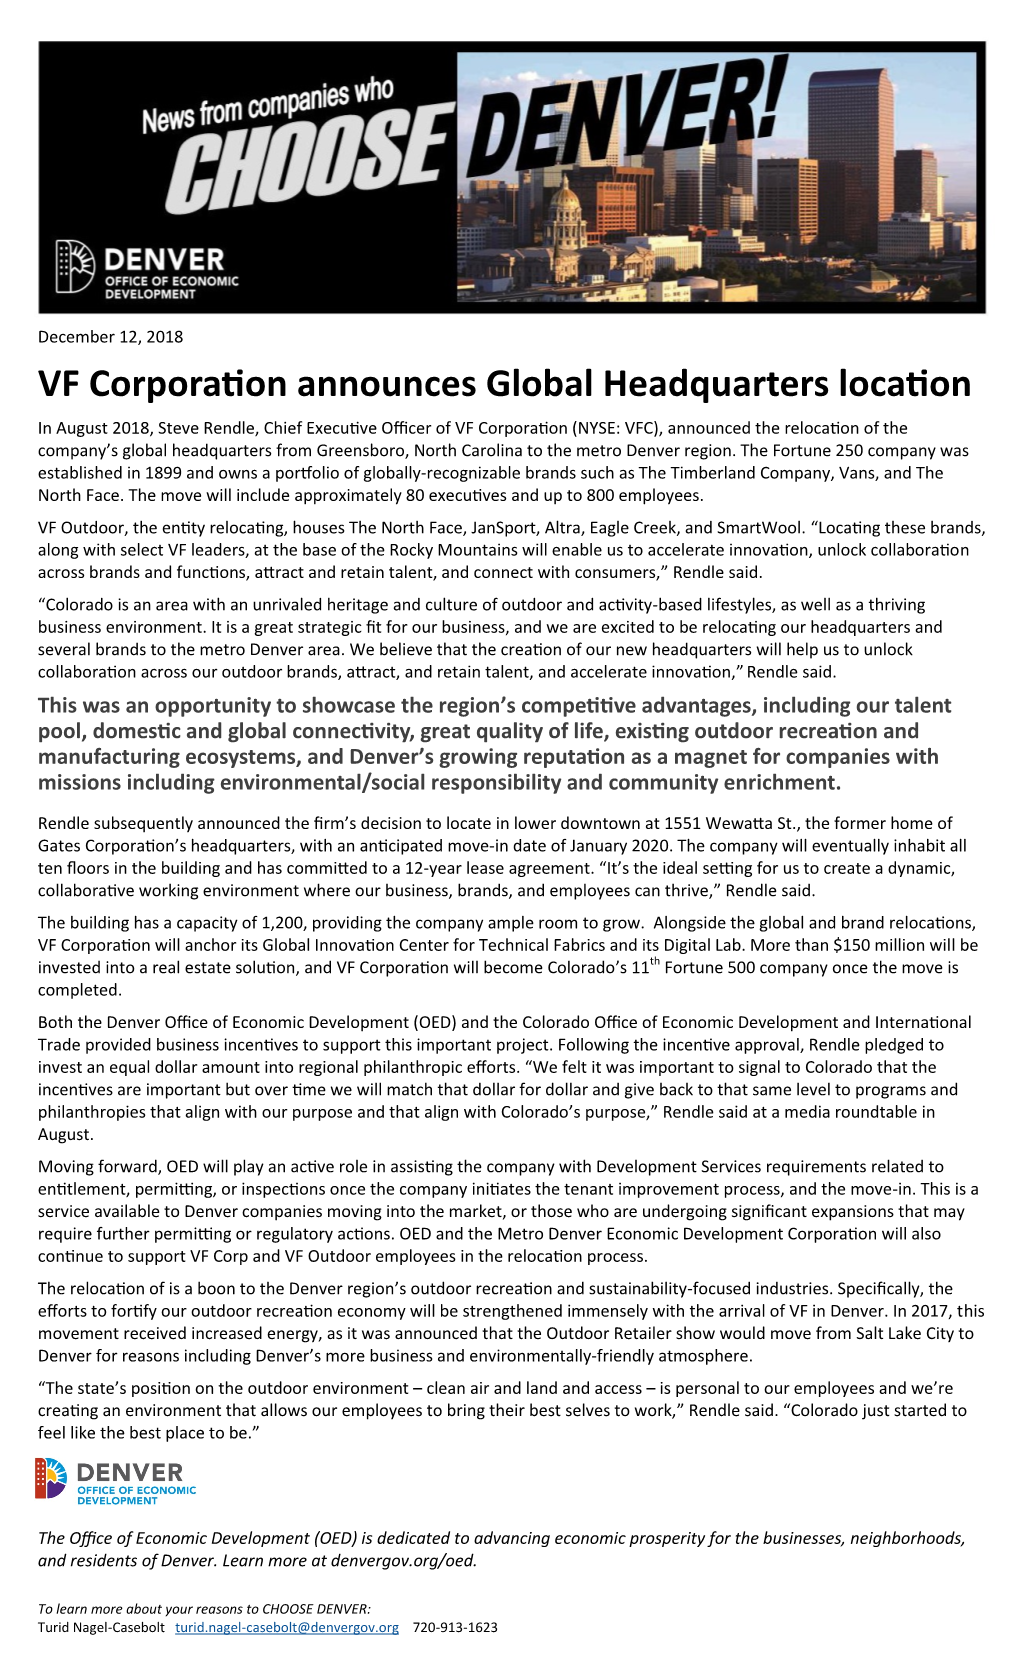 VF Corporation Announces Global Headquarters Location